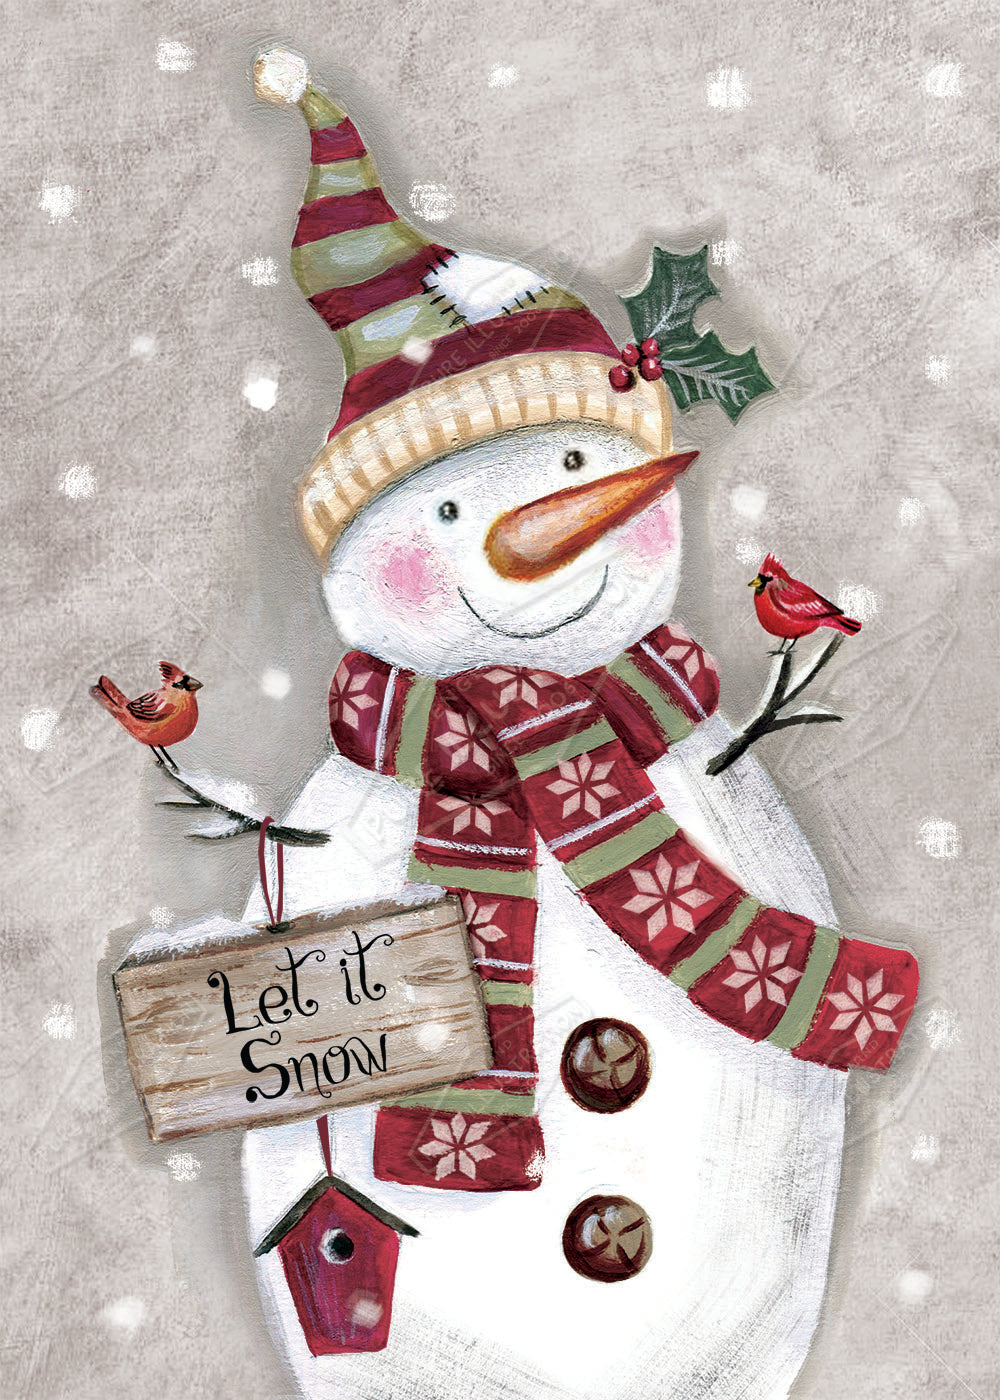 00030048DEV - Deva Evans is represented by Pure Art Licensing Agency - Christmas Greeting Card Design